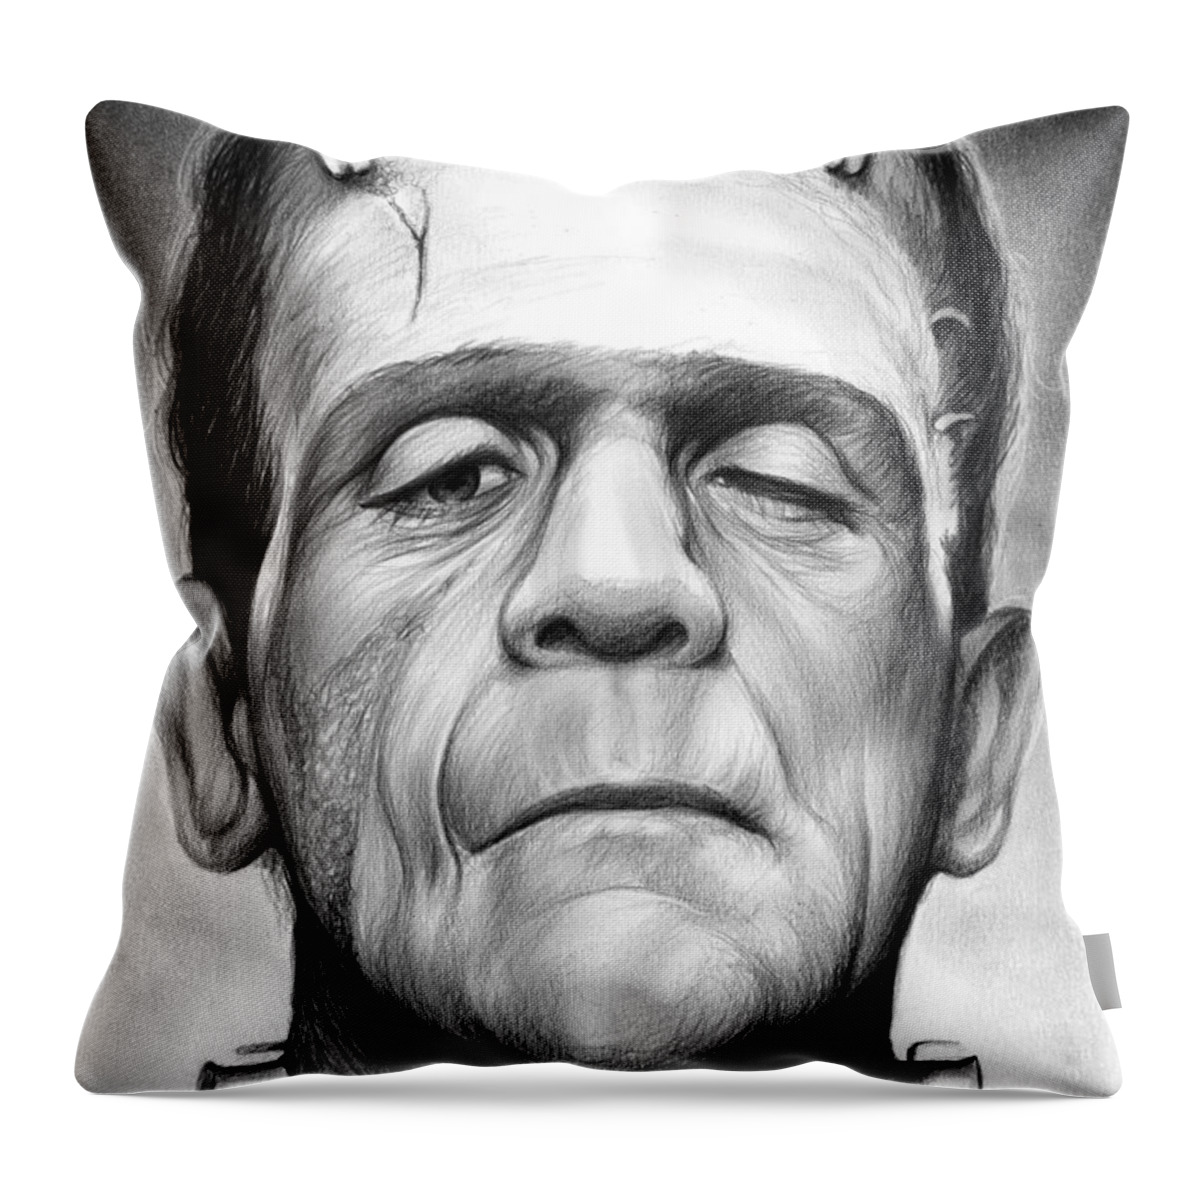 Boris Karloff Throw Pillow featuring the drawing Frankenstein by Greg Joens